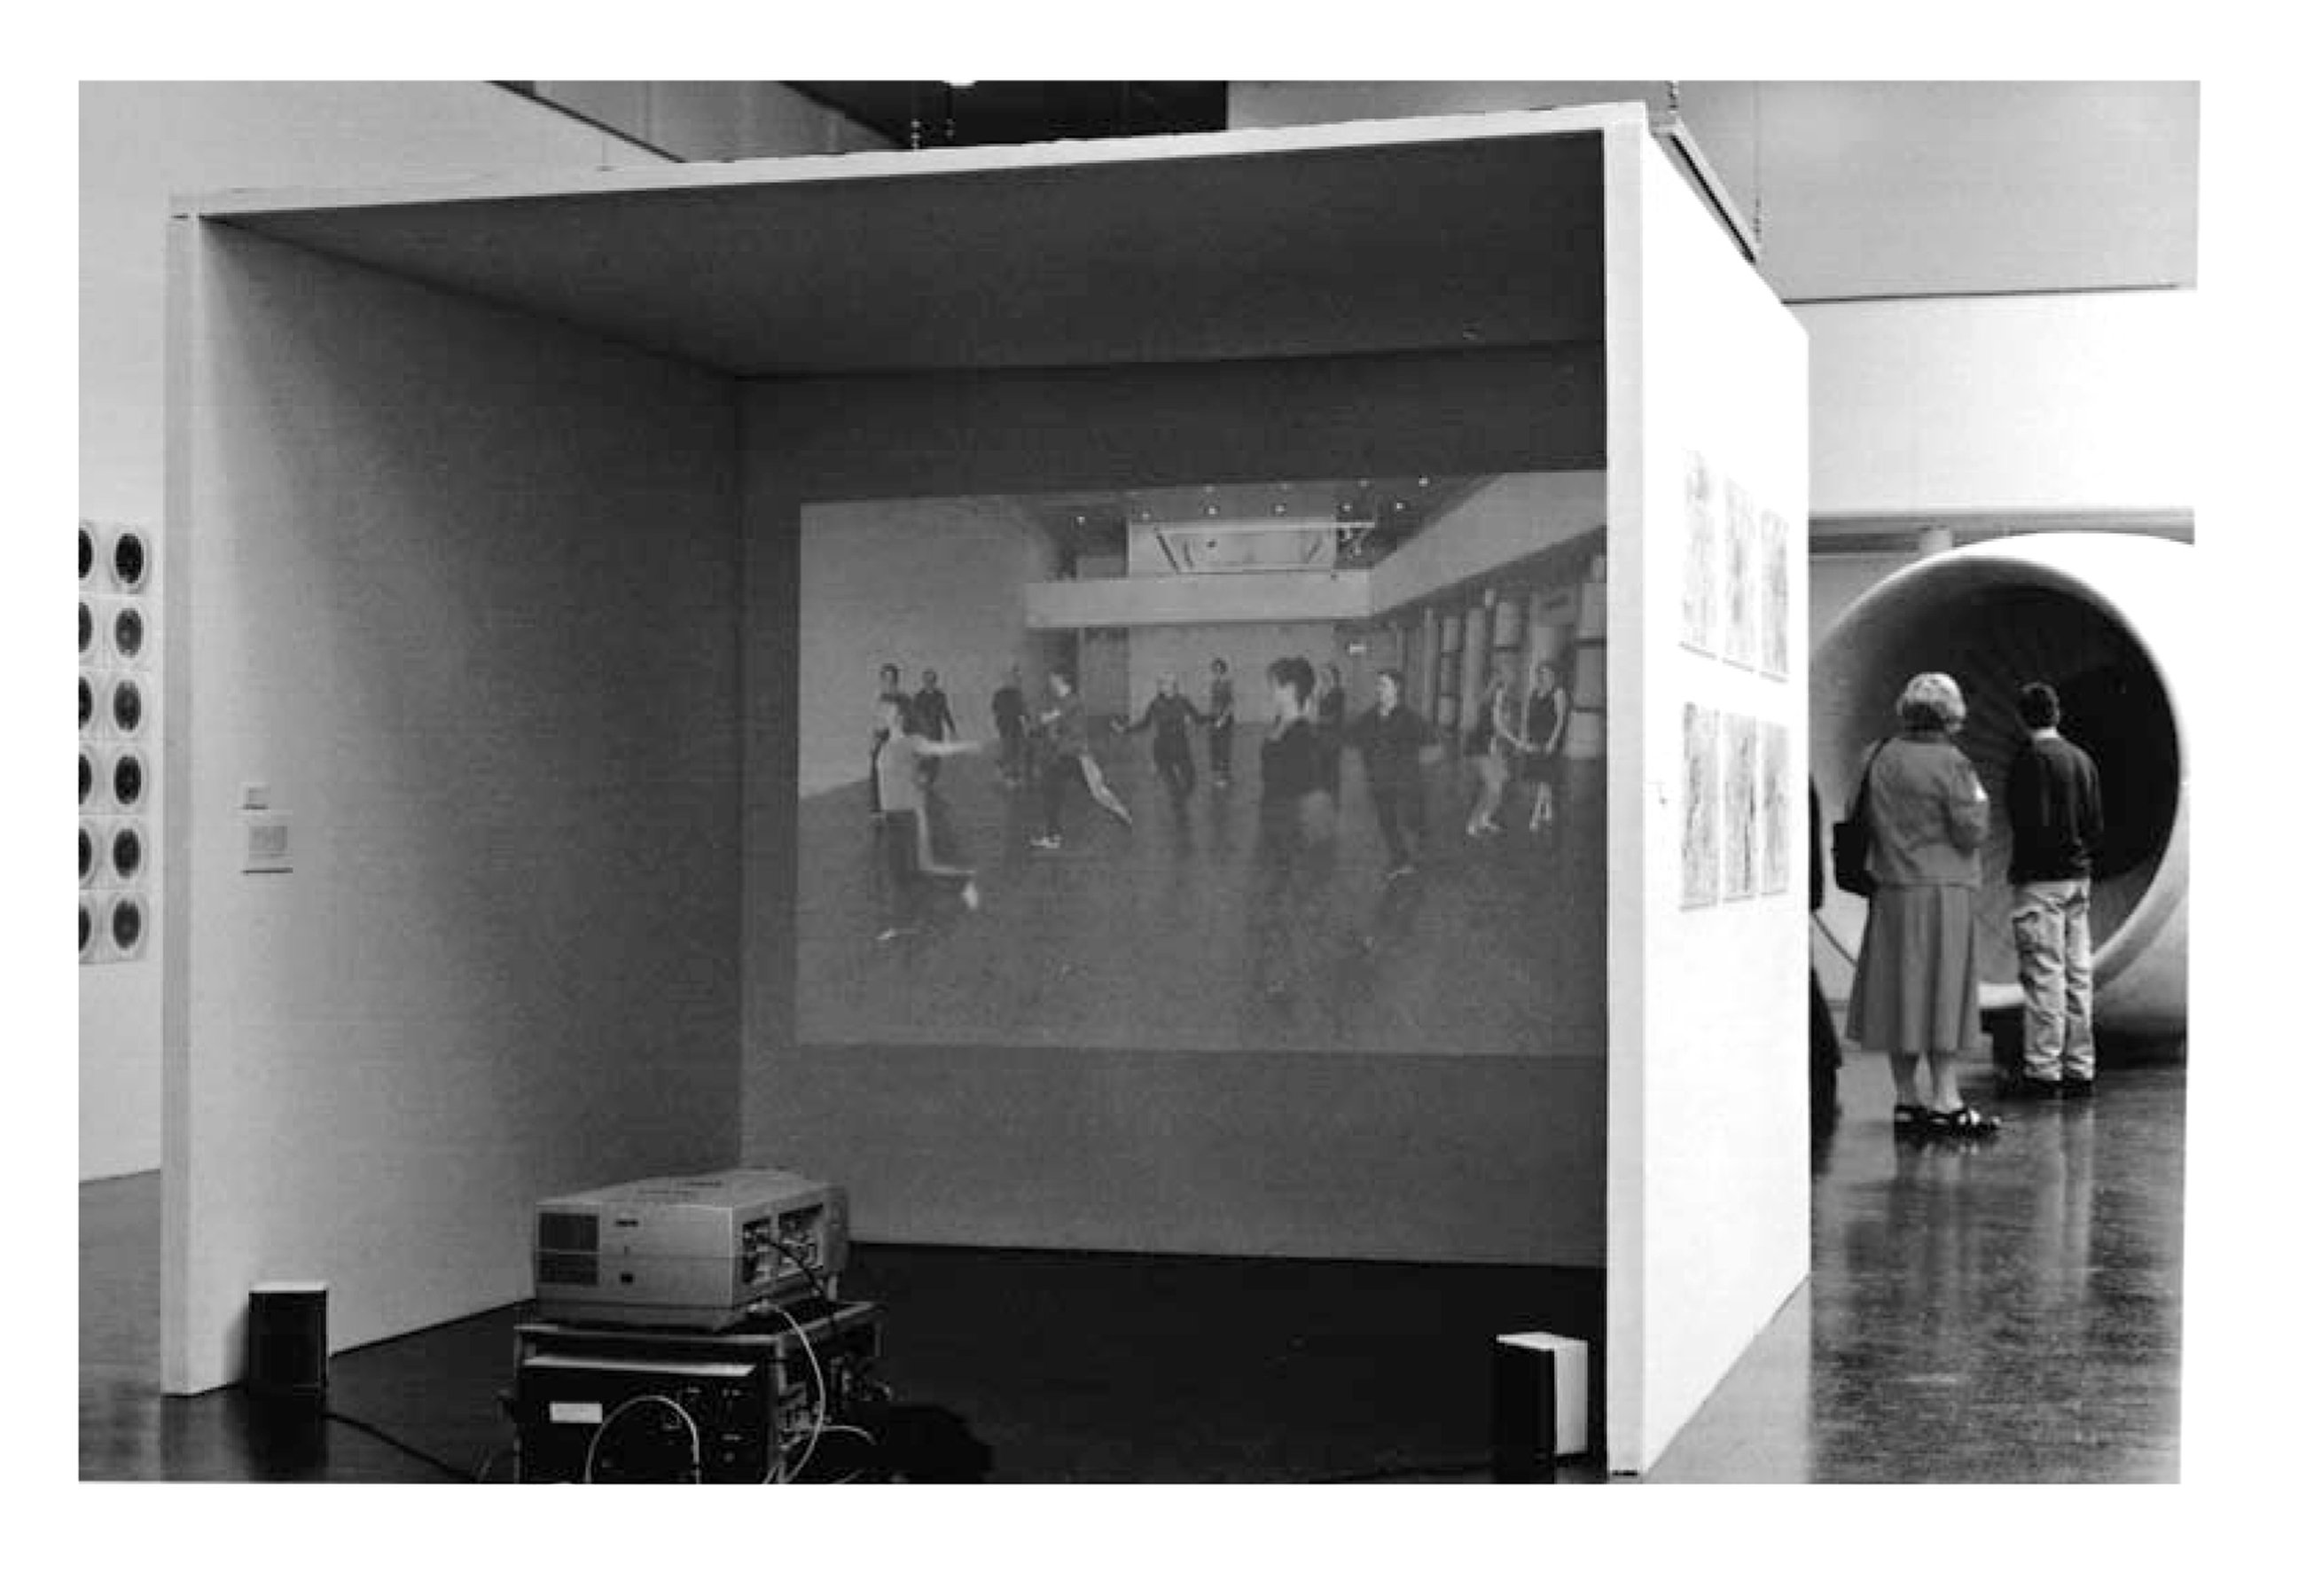 Graduate Show, 1999, Beta, 03’20'', installation view, Konstfack, International College of arts, crafts and design